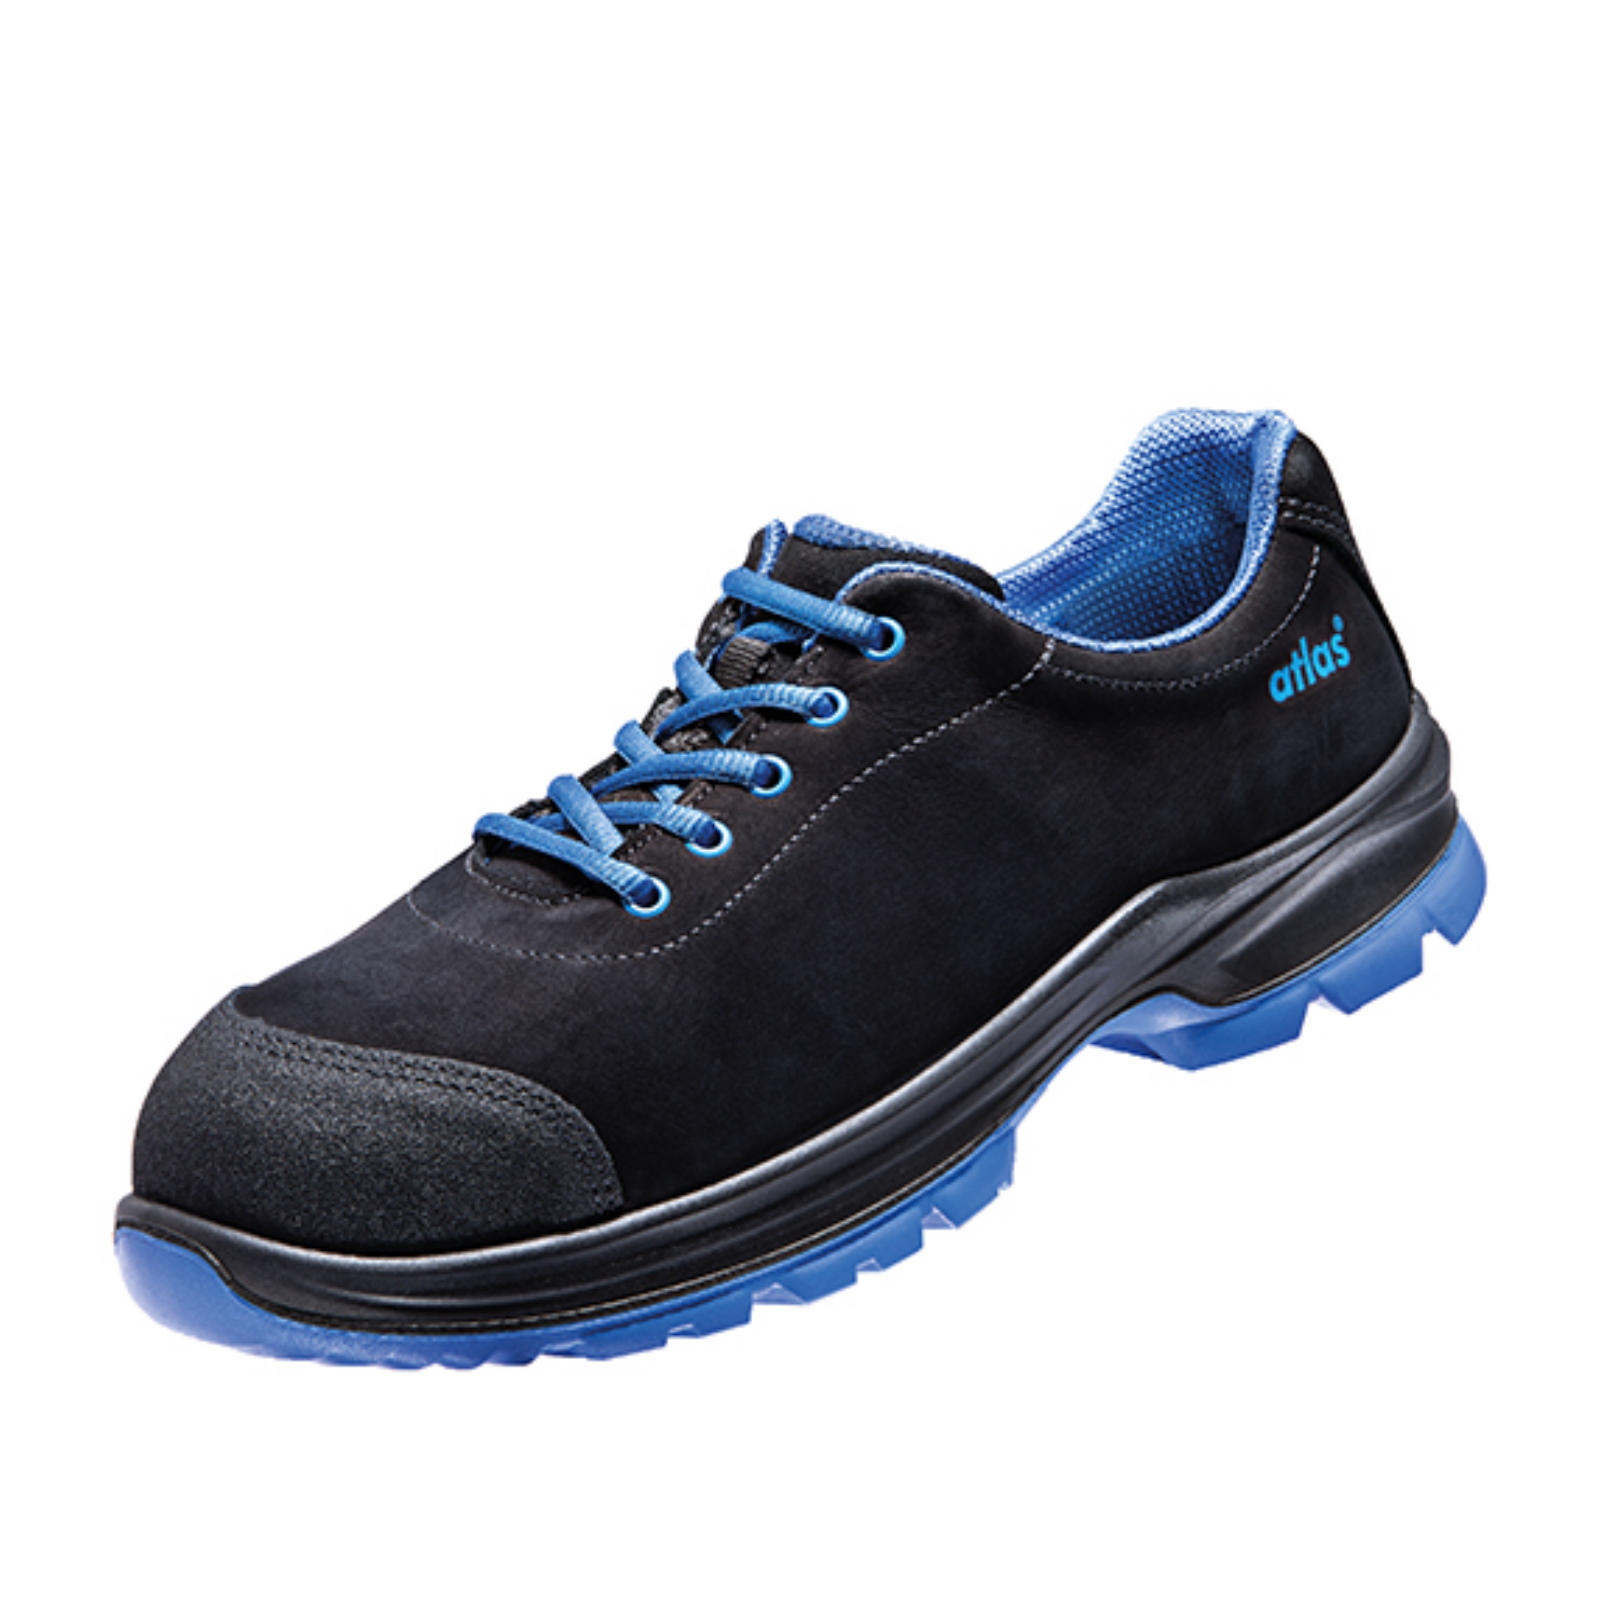 ATLAS SL 605 XP BLUE | ESD - EN ISO 20345 S3 Schuhe | CBdirekt Profi-Shop  für Werkzeug / Sanitär / Garten